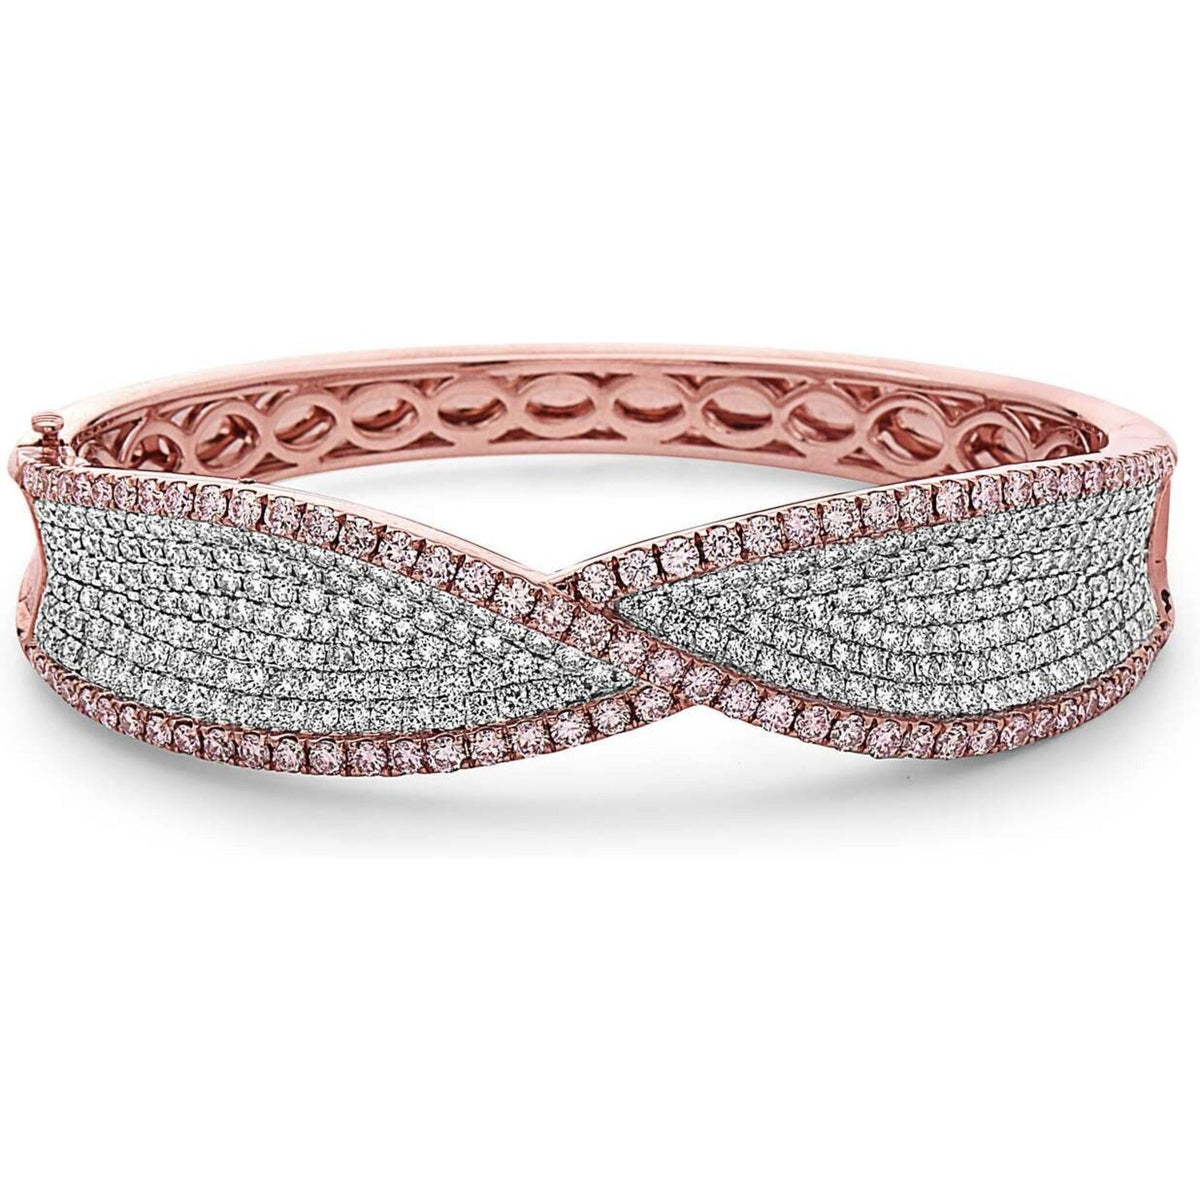 Charles Krypell precious diamond twisted bracelet with pink diamond